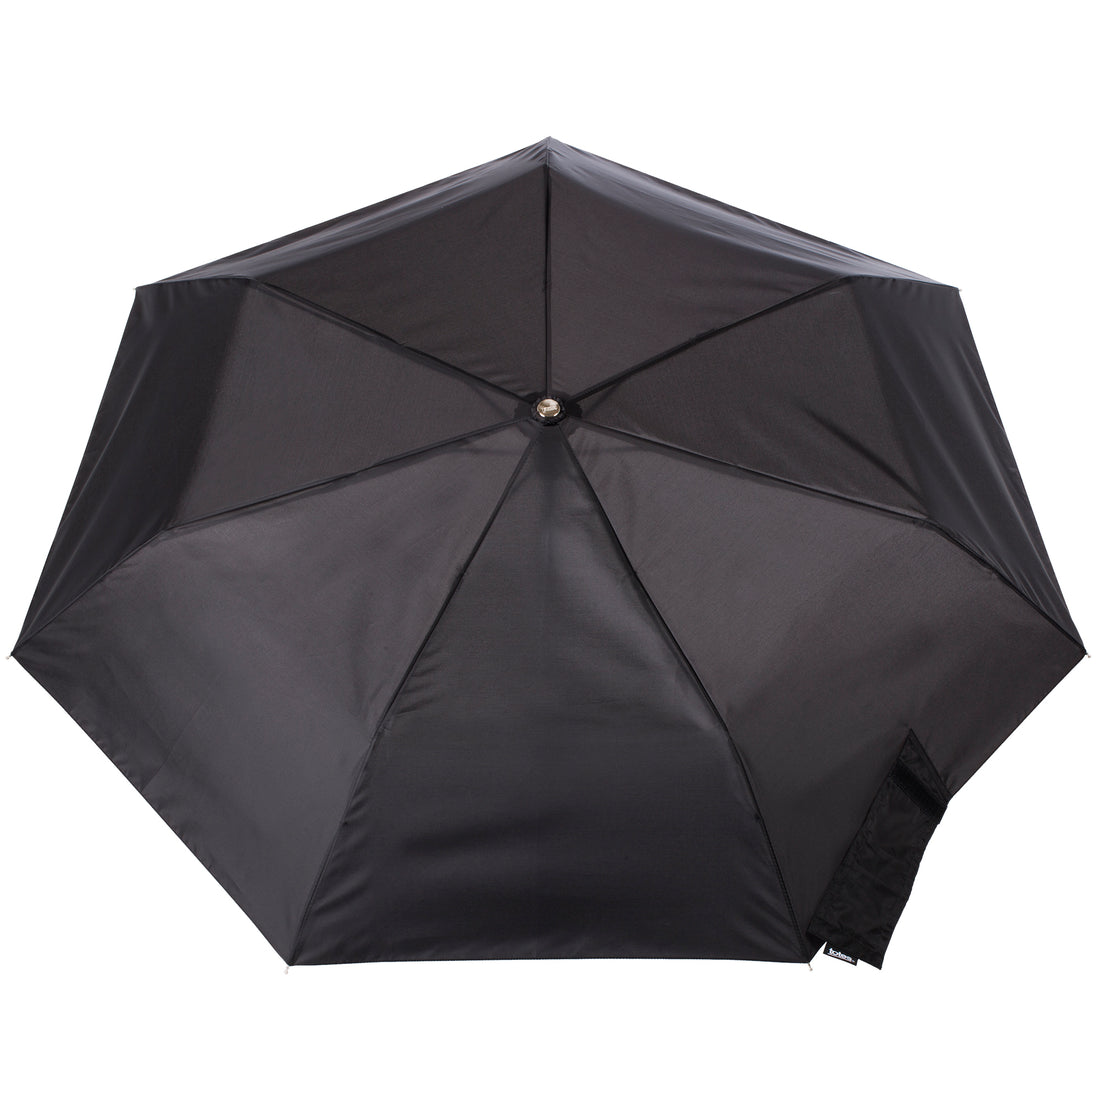 Large SunGuard® Folding Umbrella with Auto Open/Close Technology